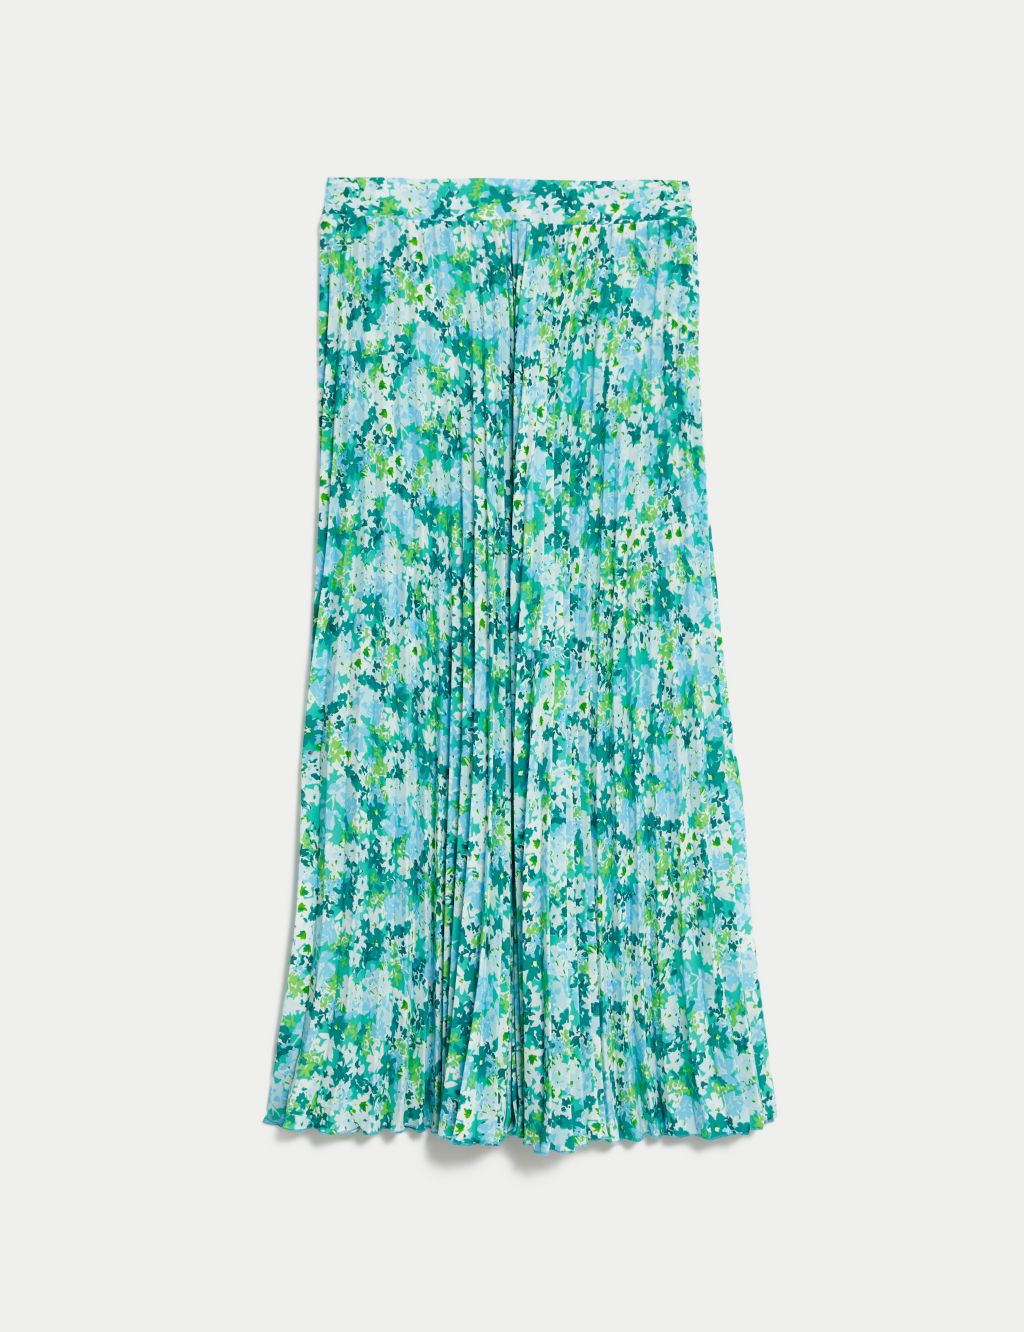 Floral Pleated Midaxi Skirt image 2